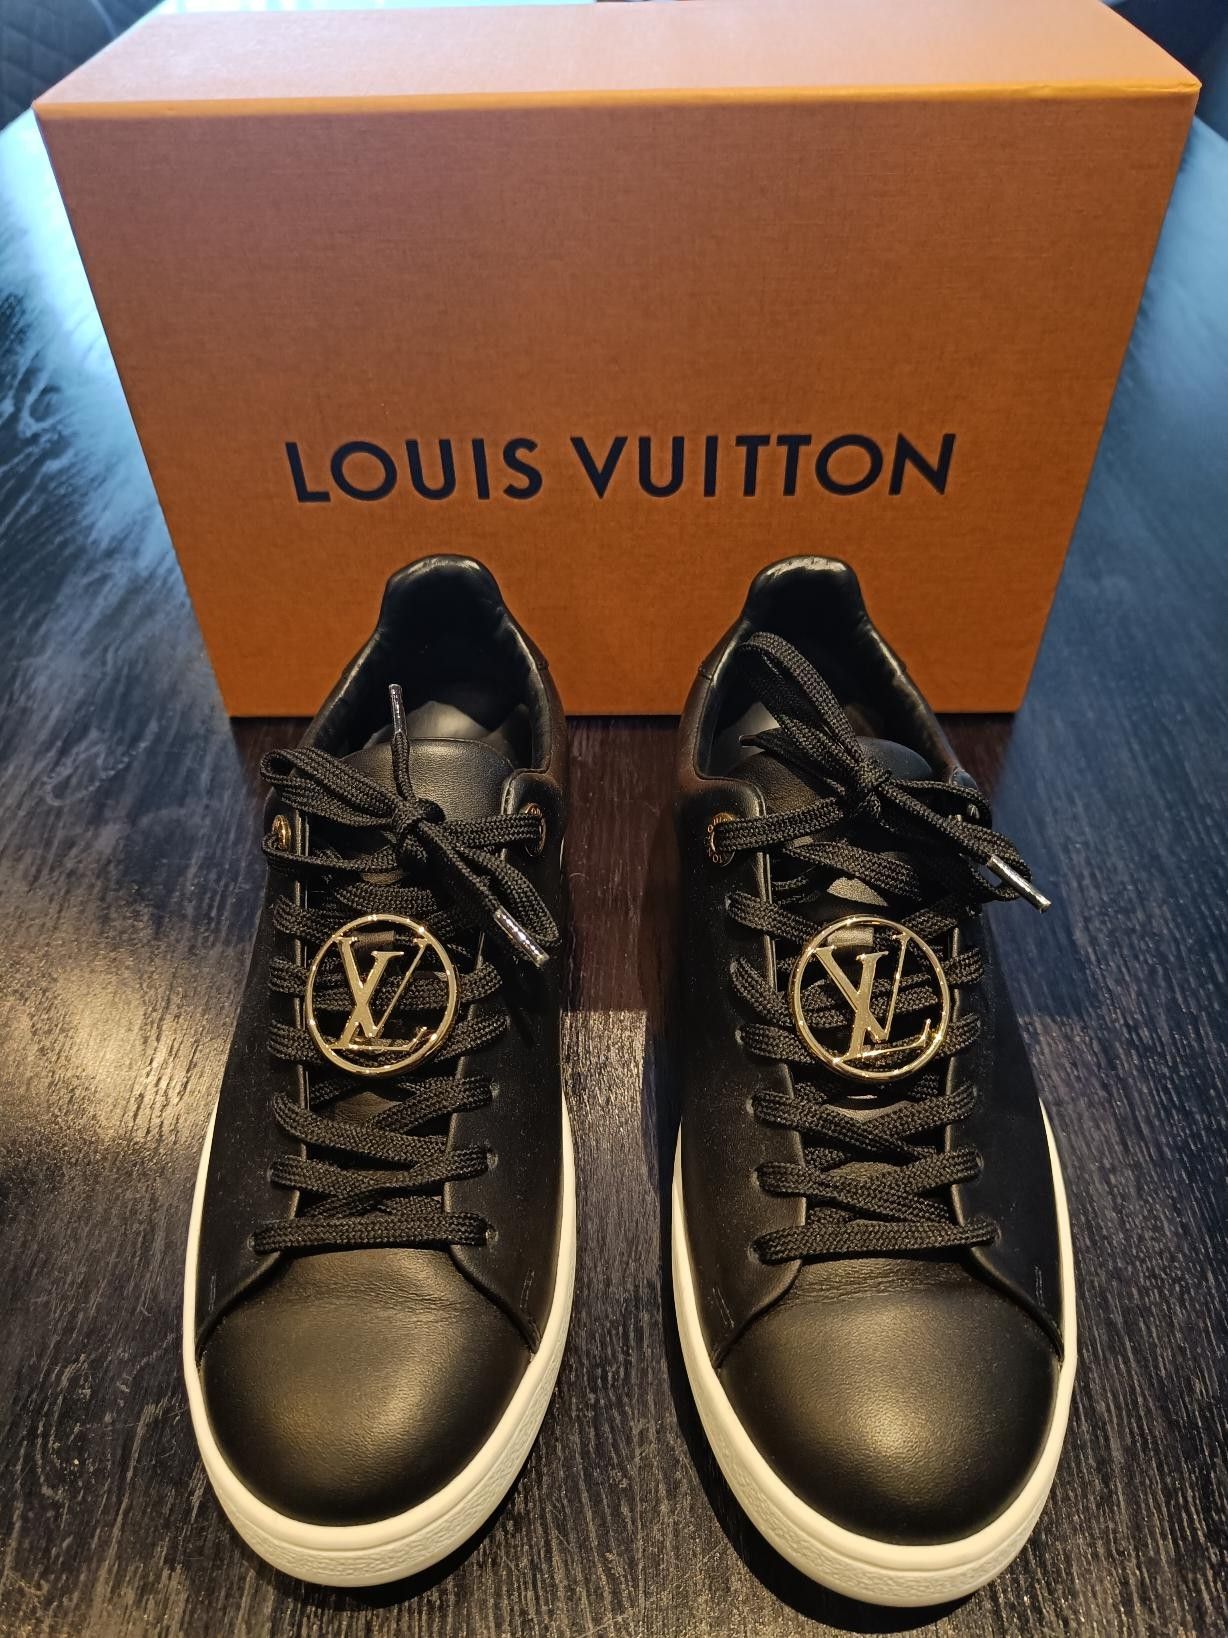 Helt nye Louis vuitton sko